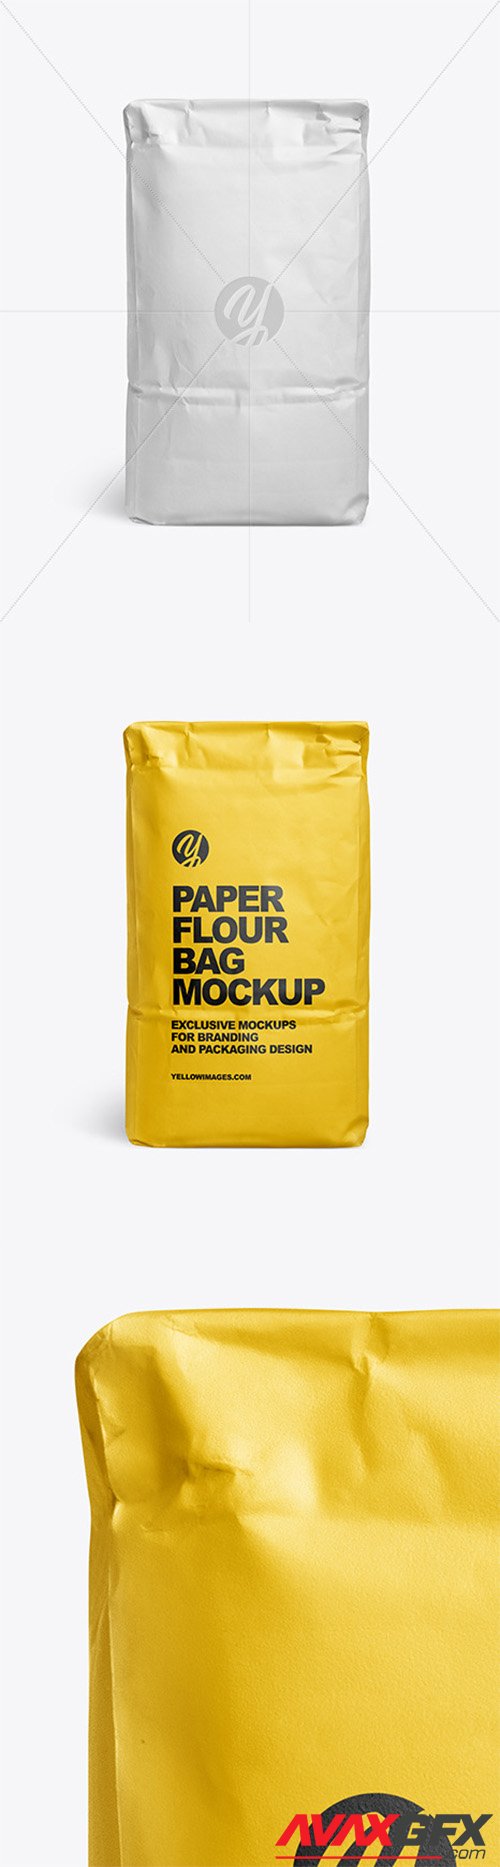 Download Free Flour Paper Bag Packaging Mockup Download Free And Premium Psd Mockups PSD Mockup Templates